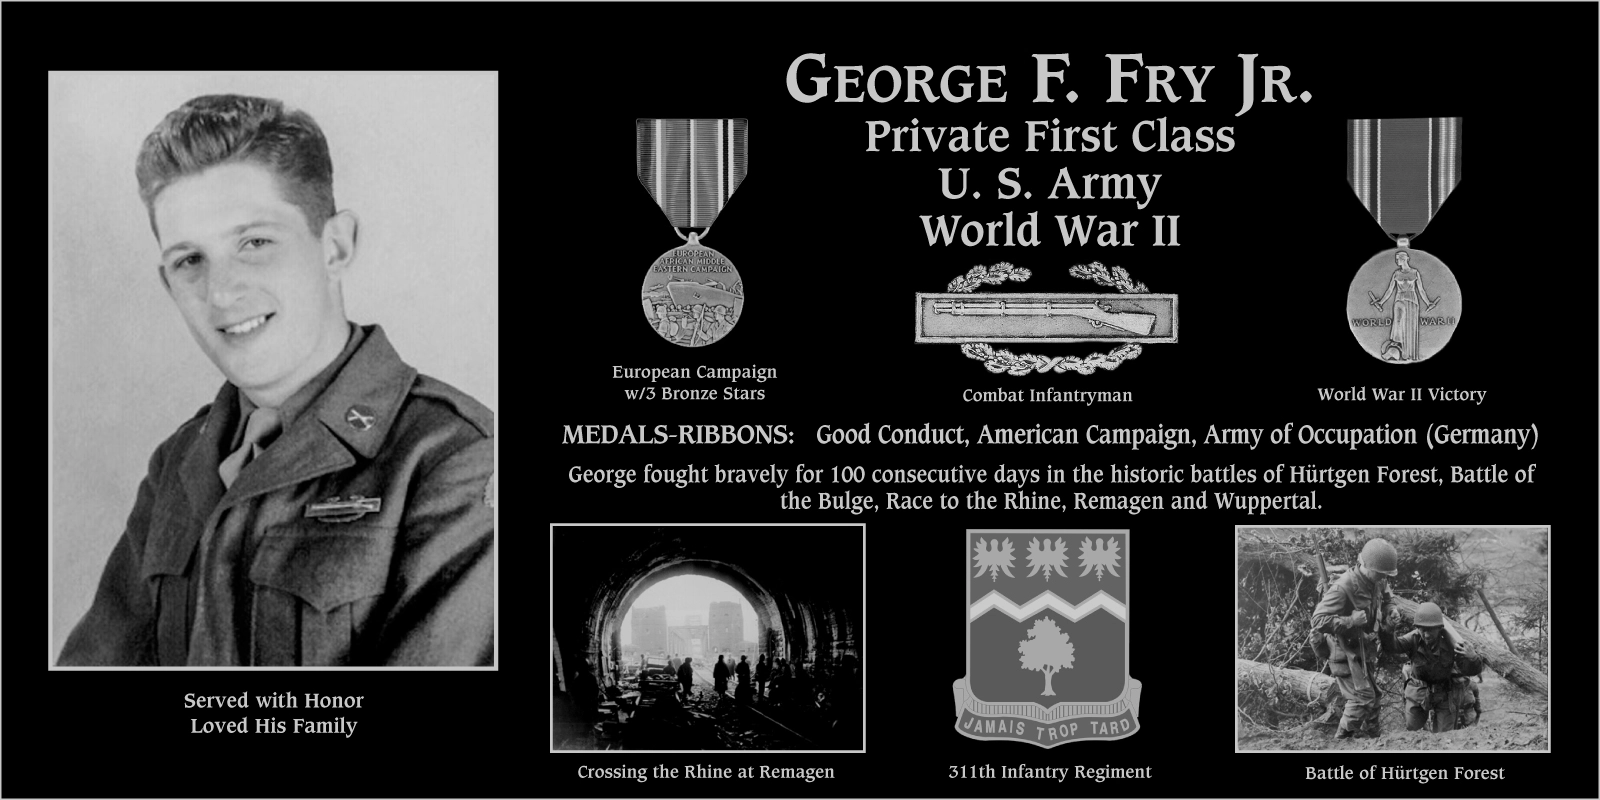 George F. Fry, jr